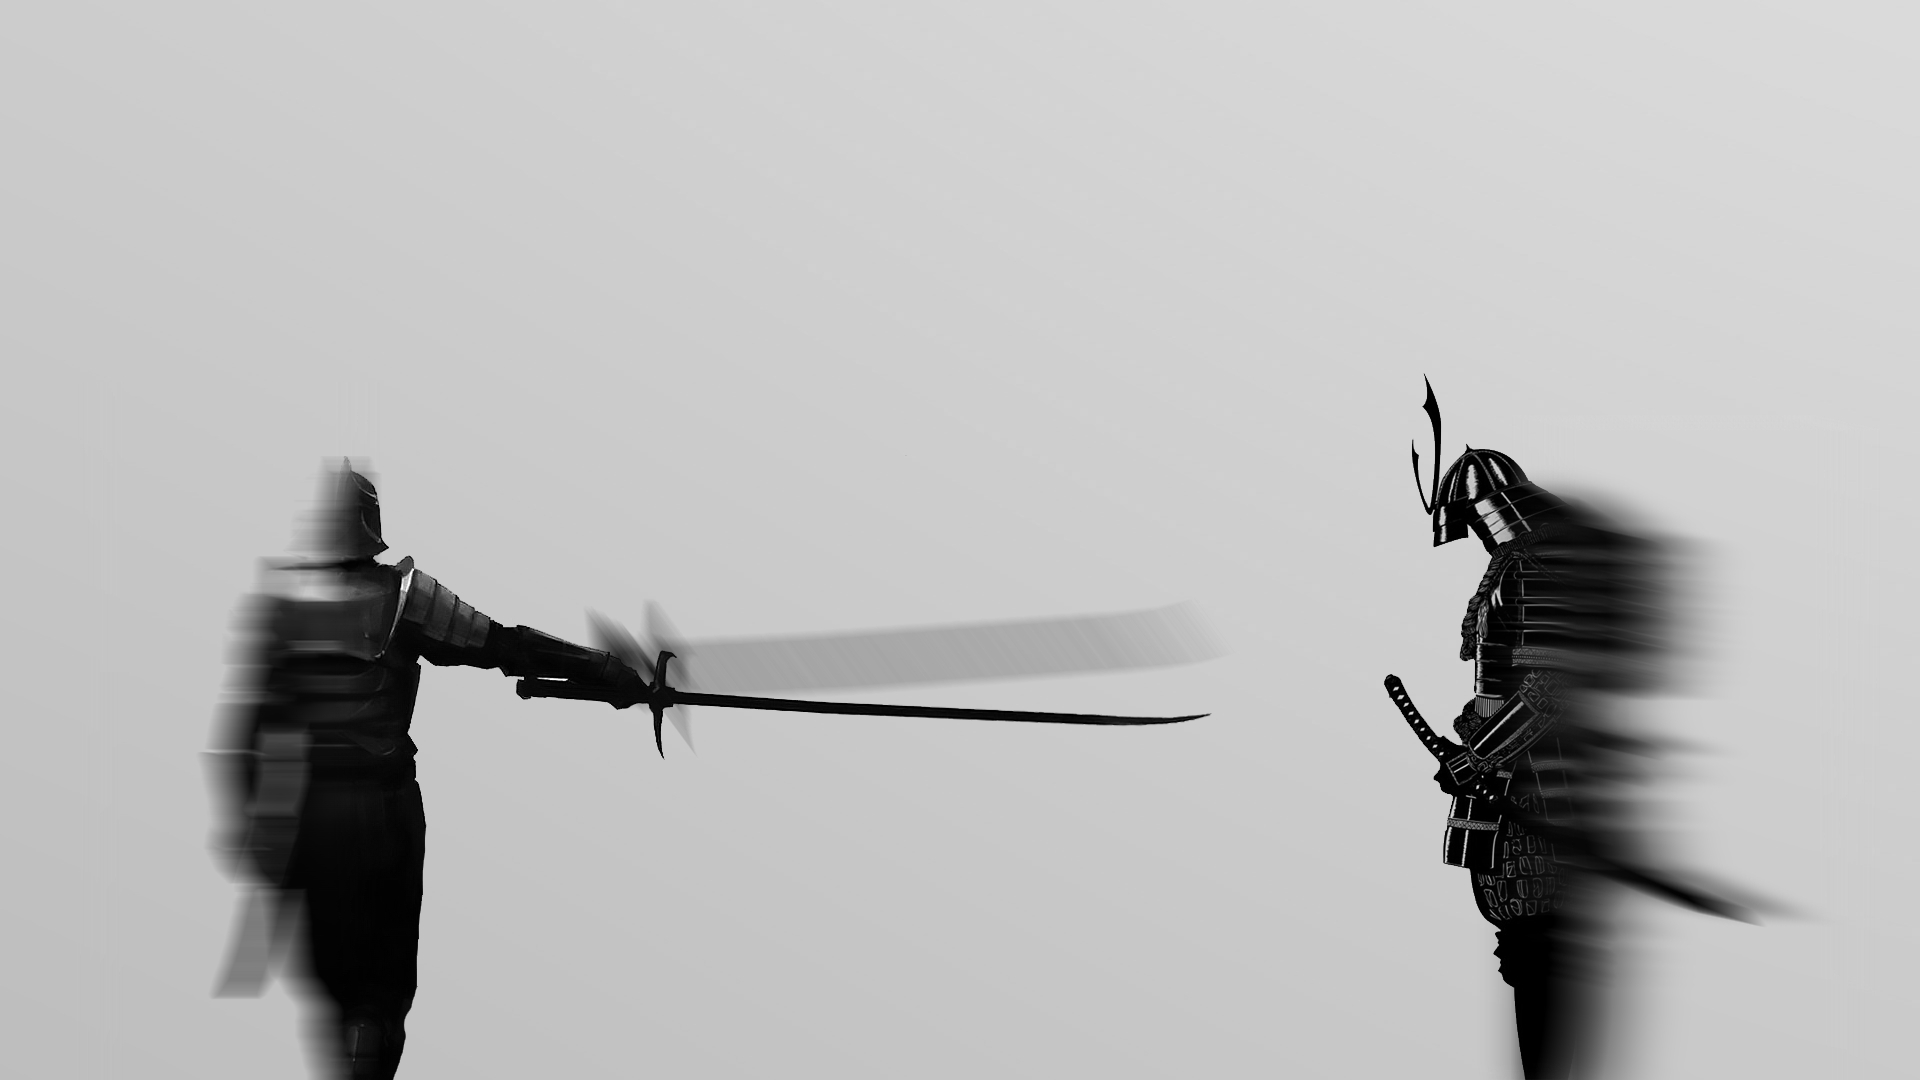 Samurai HD Wallpaper | Background Image | 1920x1080 | ID ...